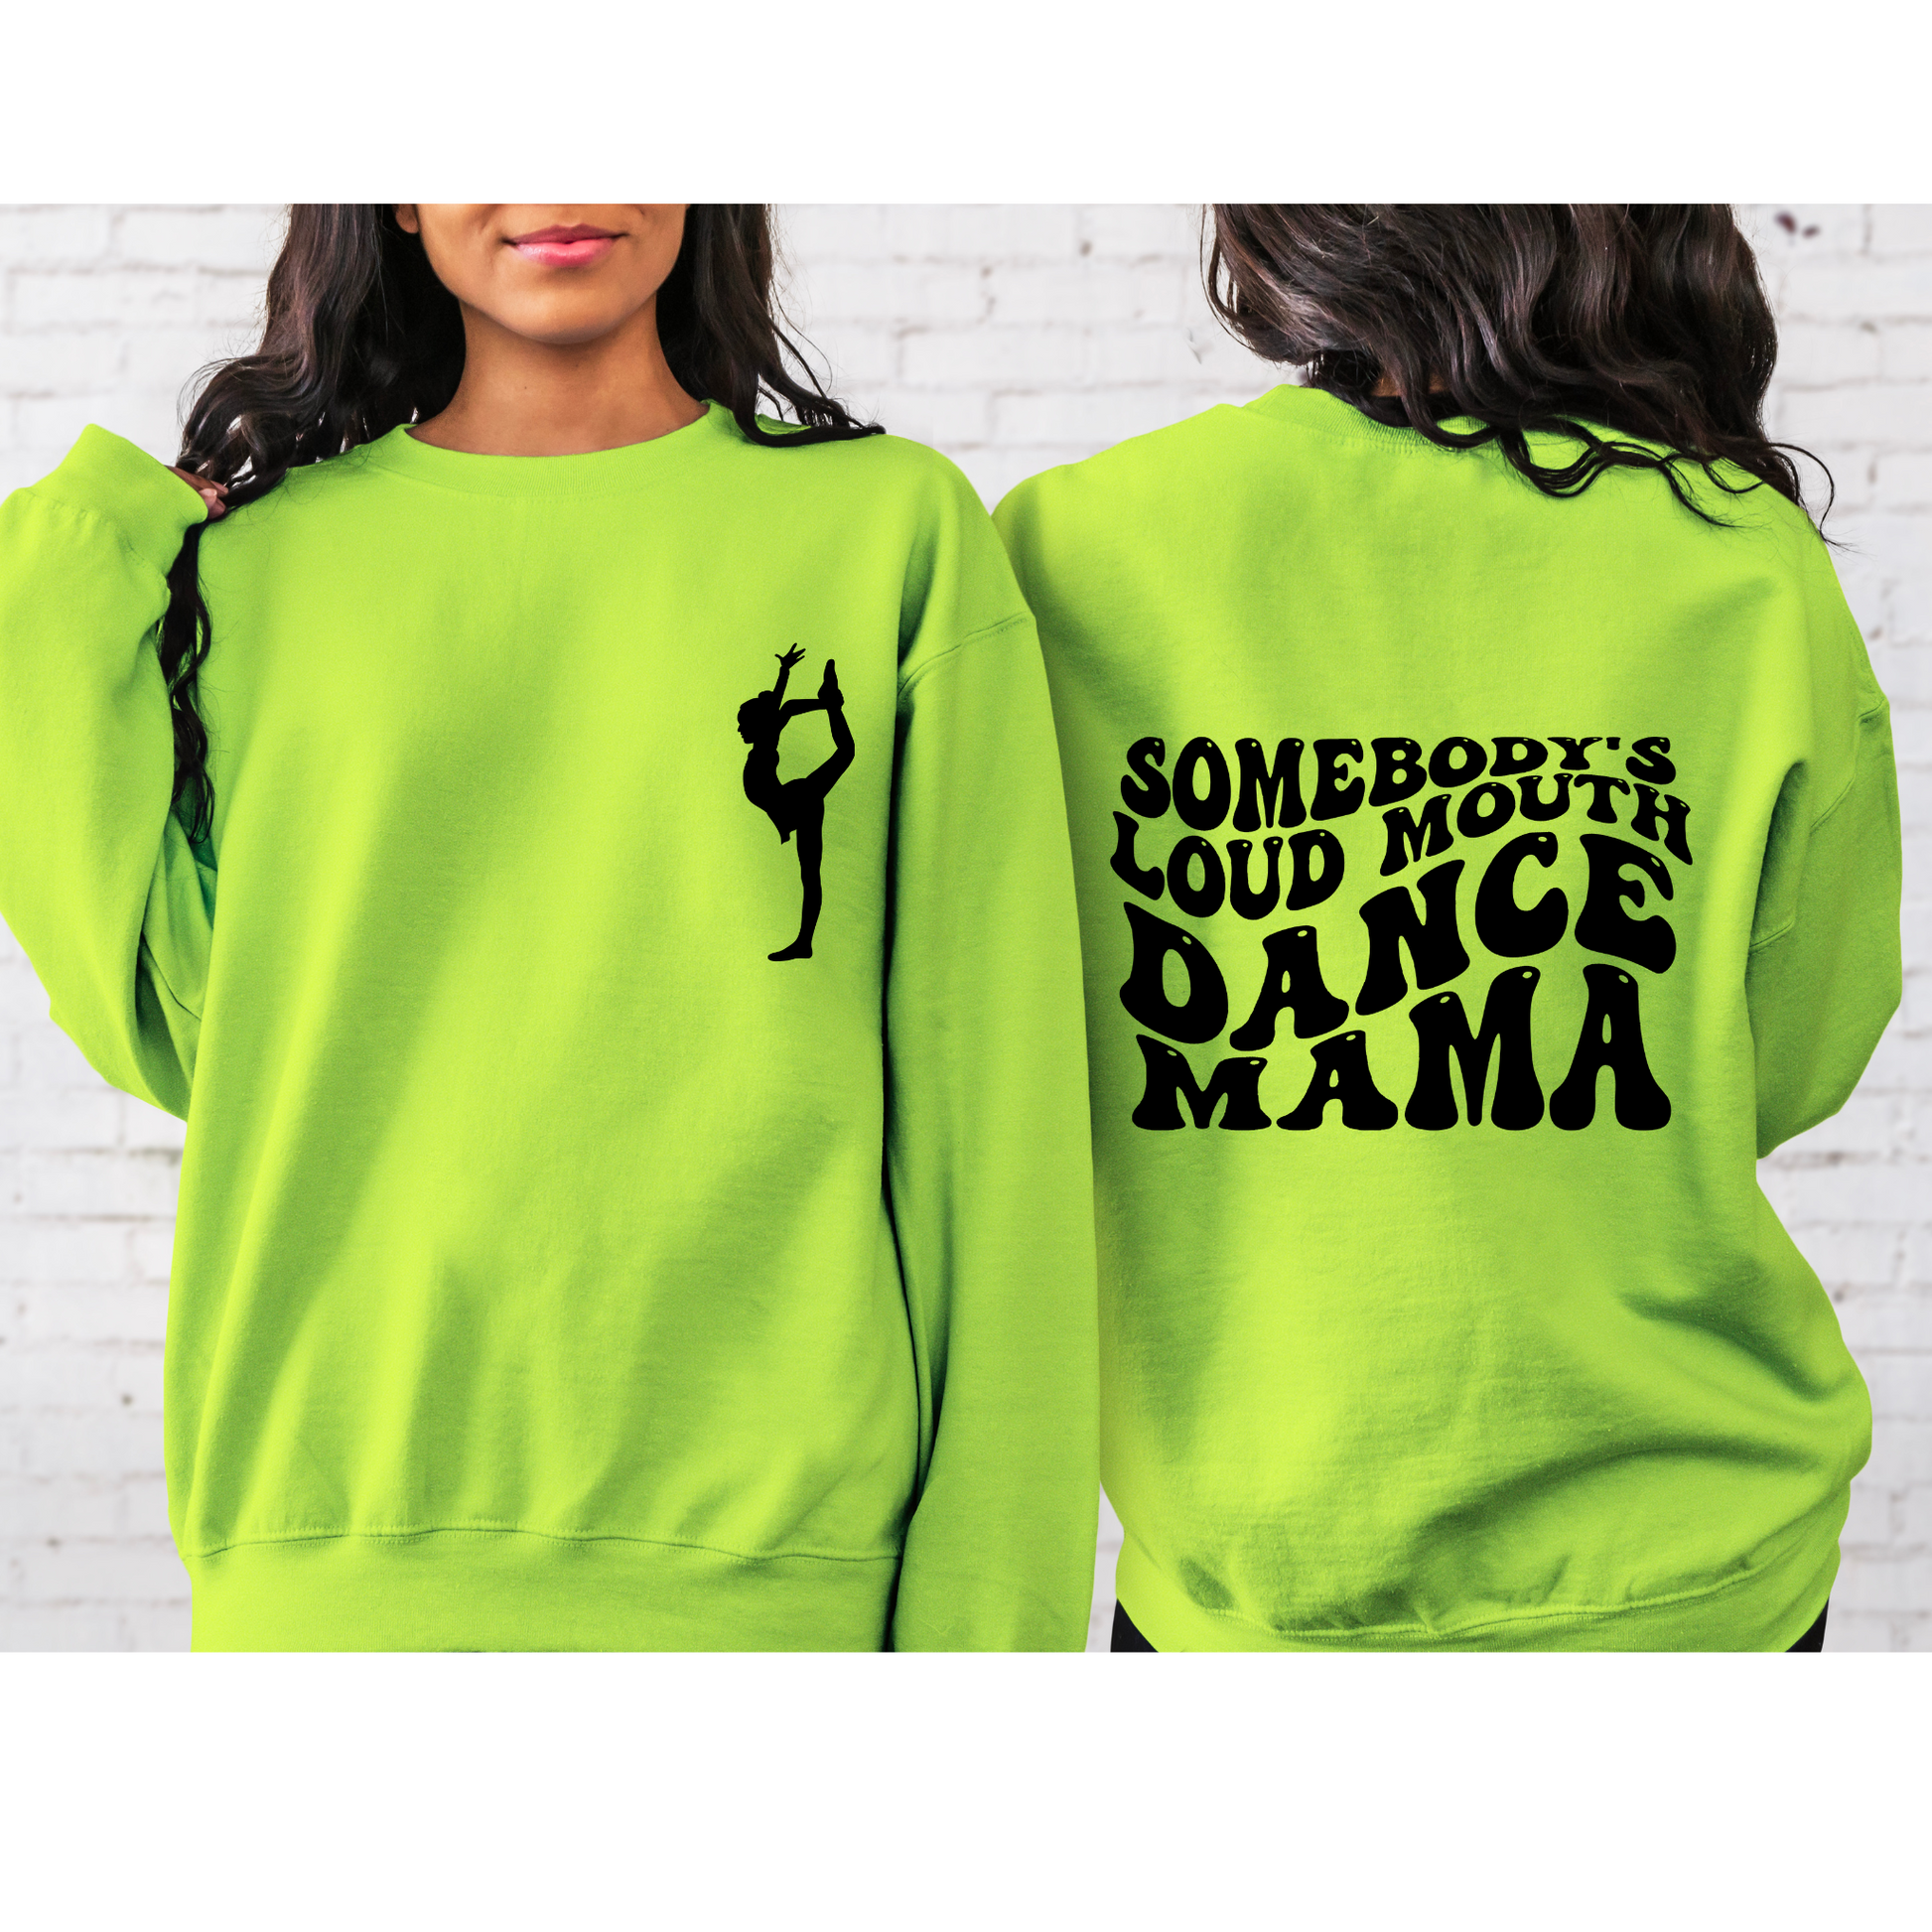 Somebody's Loud Mouth Dance Mama Crewneck Sweatshirt green